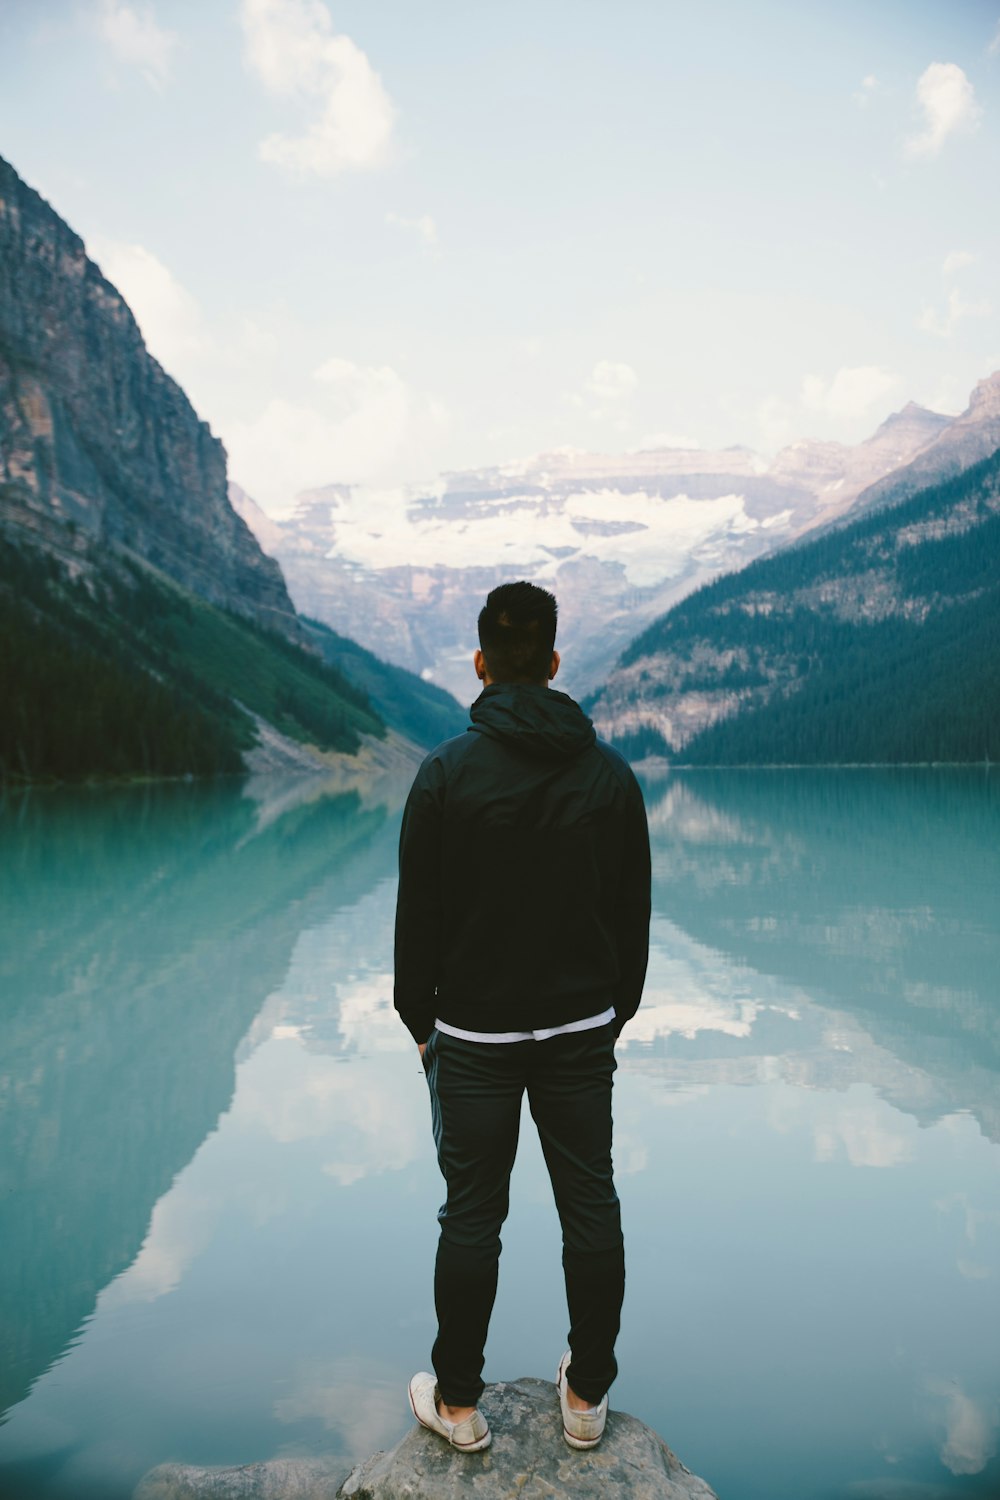 man standing in the middle rock facing lake photo – Free Lake louise Image  on Unsplash